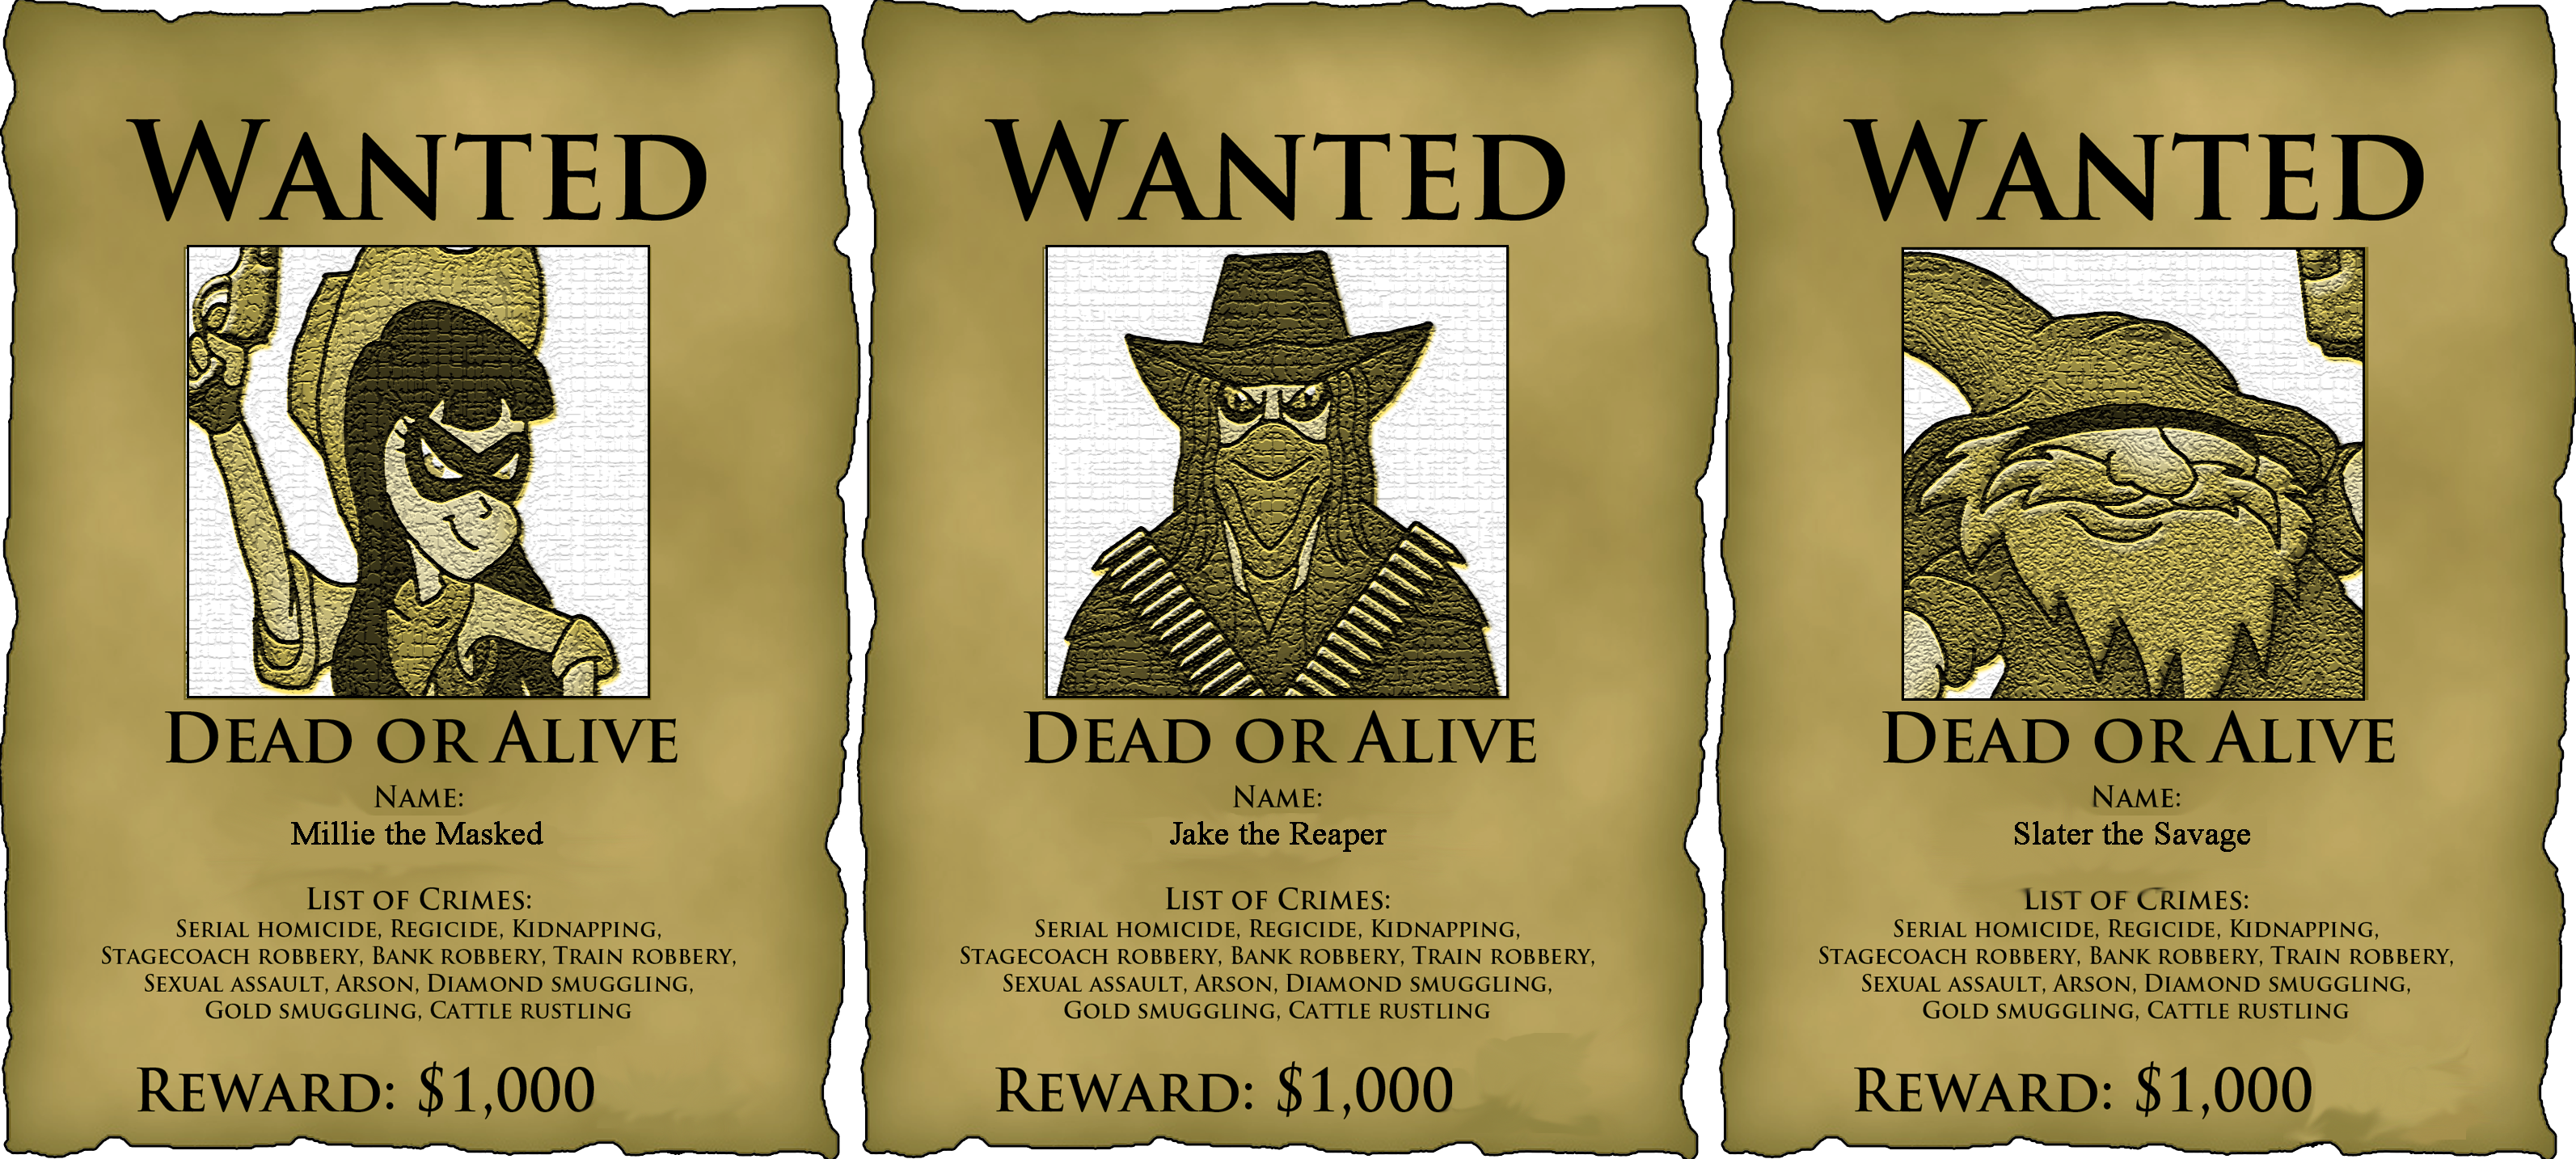 Wanted demo. Wanted плакат. Плакат розыска. Плакат разыскивается дикий Запад. Wanted картинка.